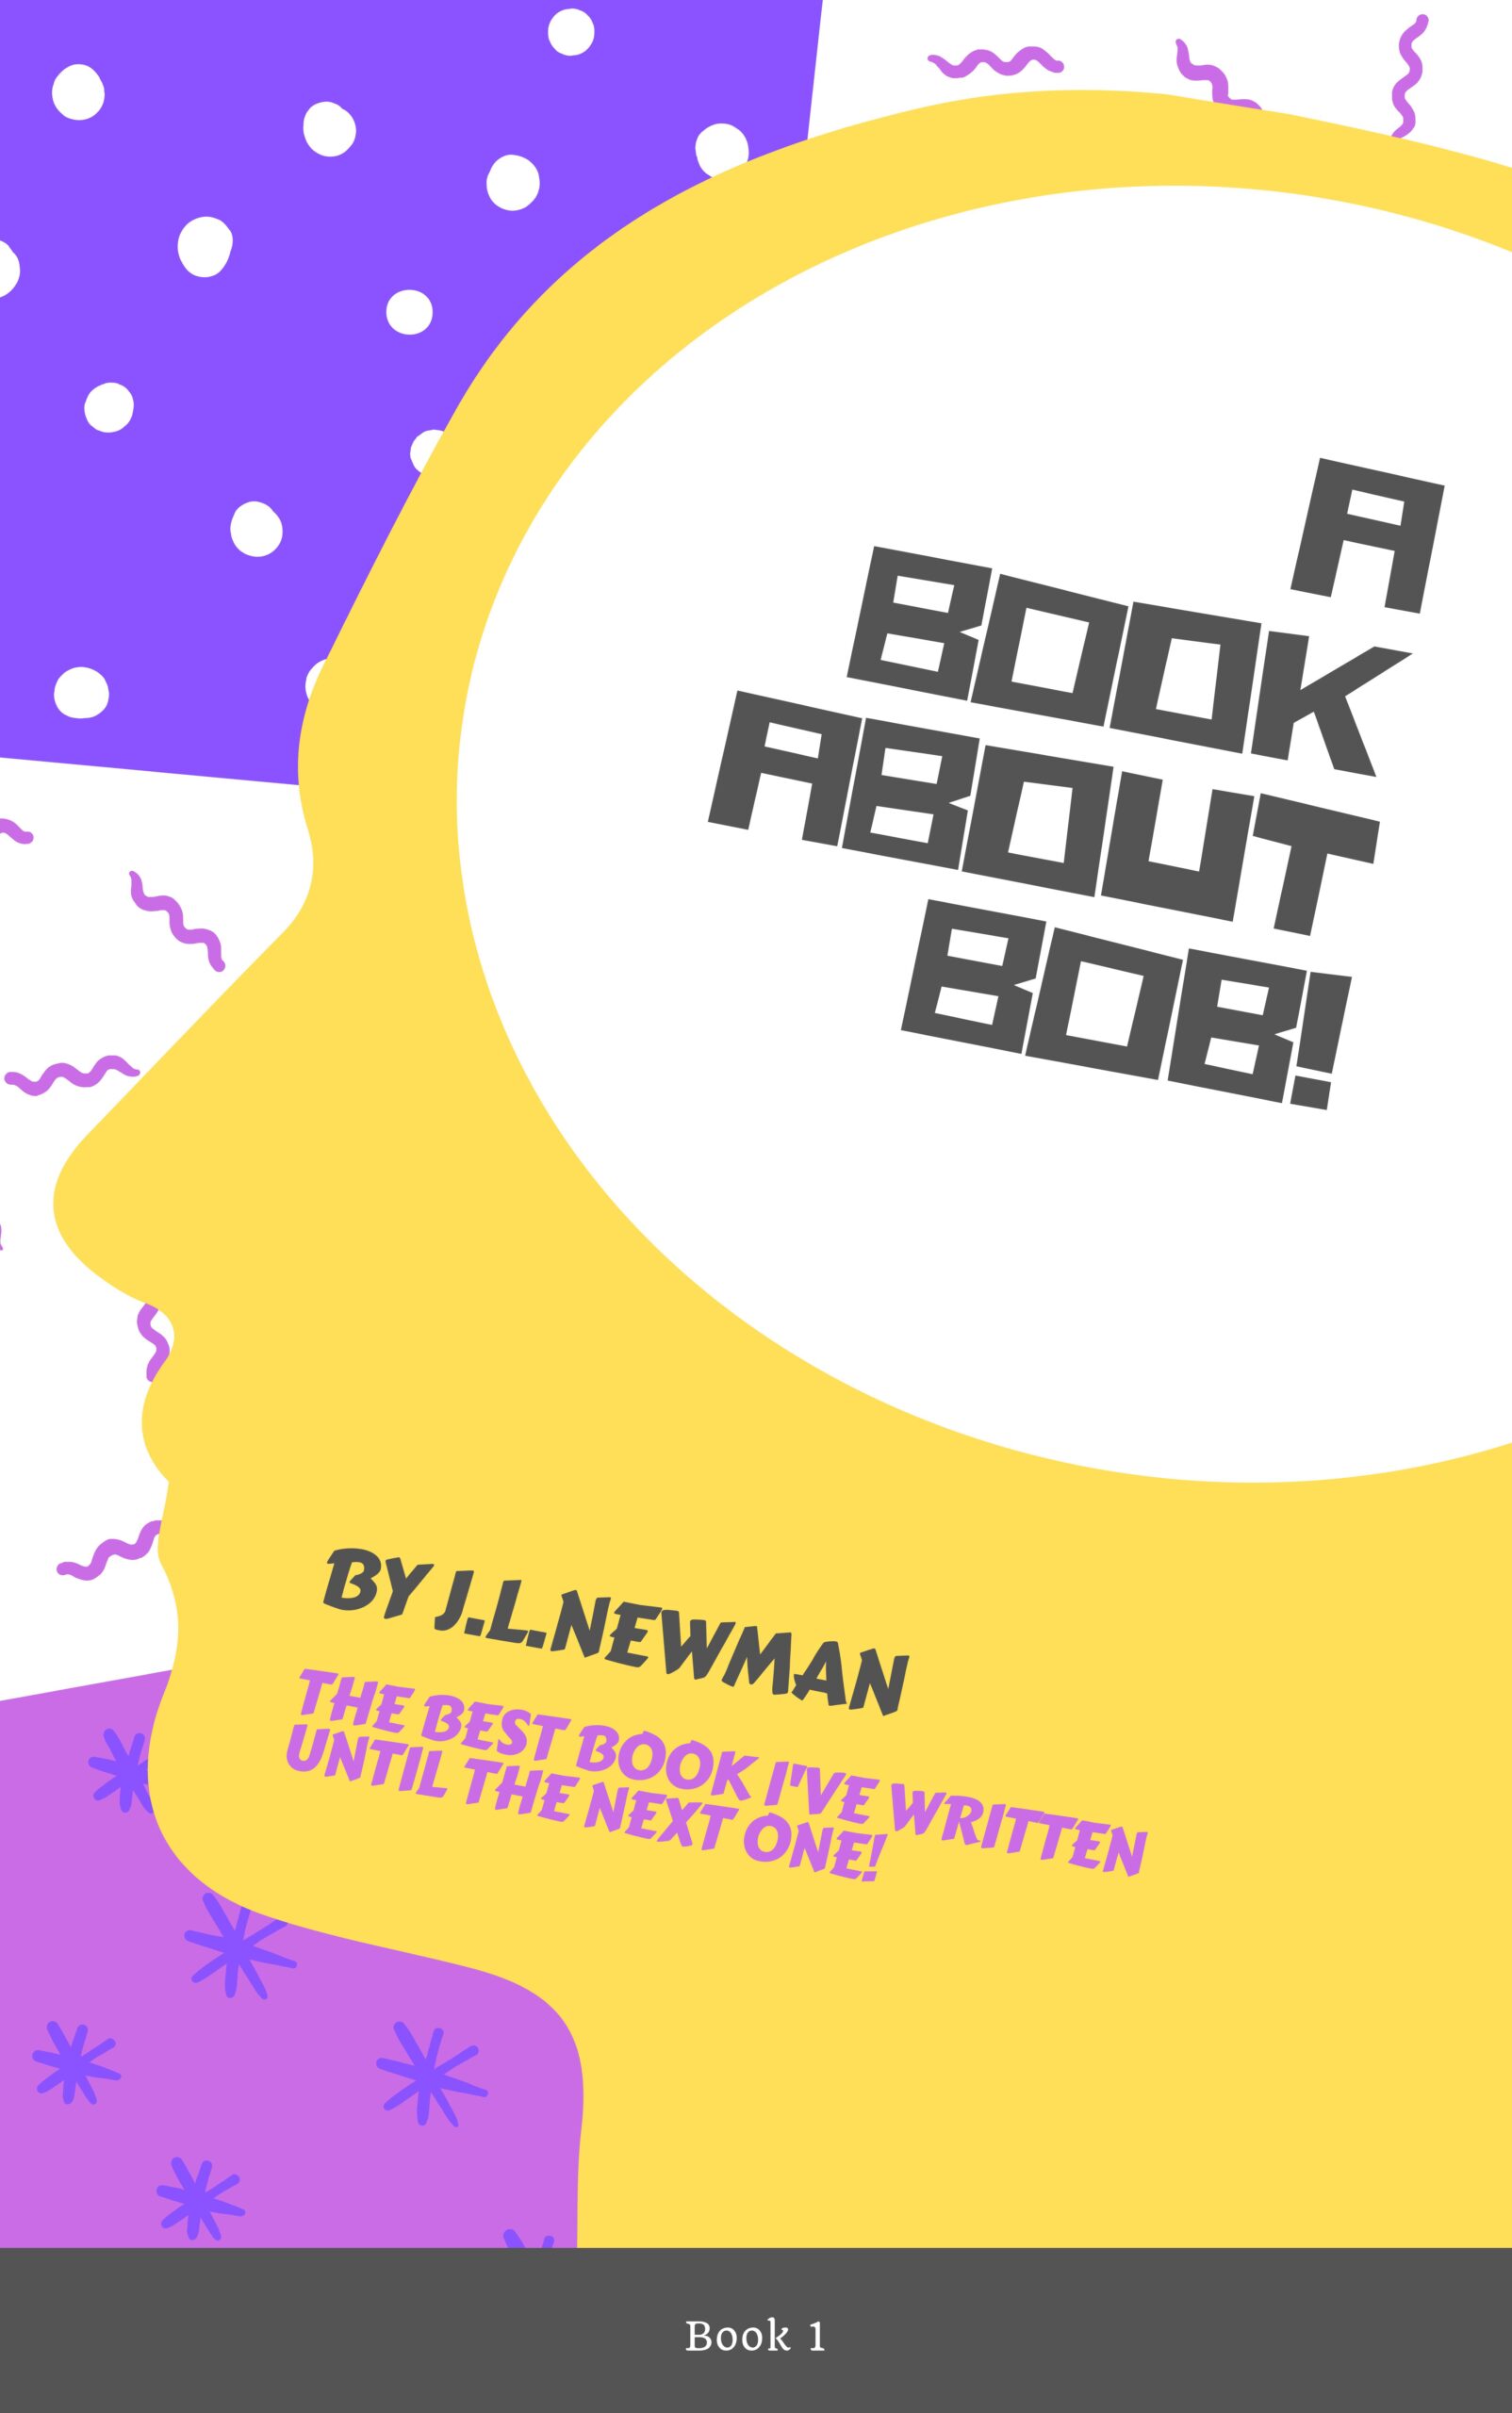 FREE: A Book About Bob by J.L.Newman